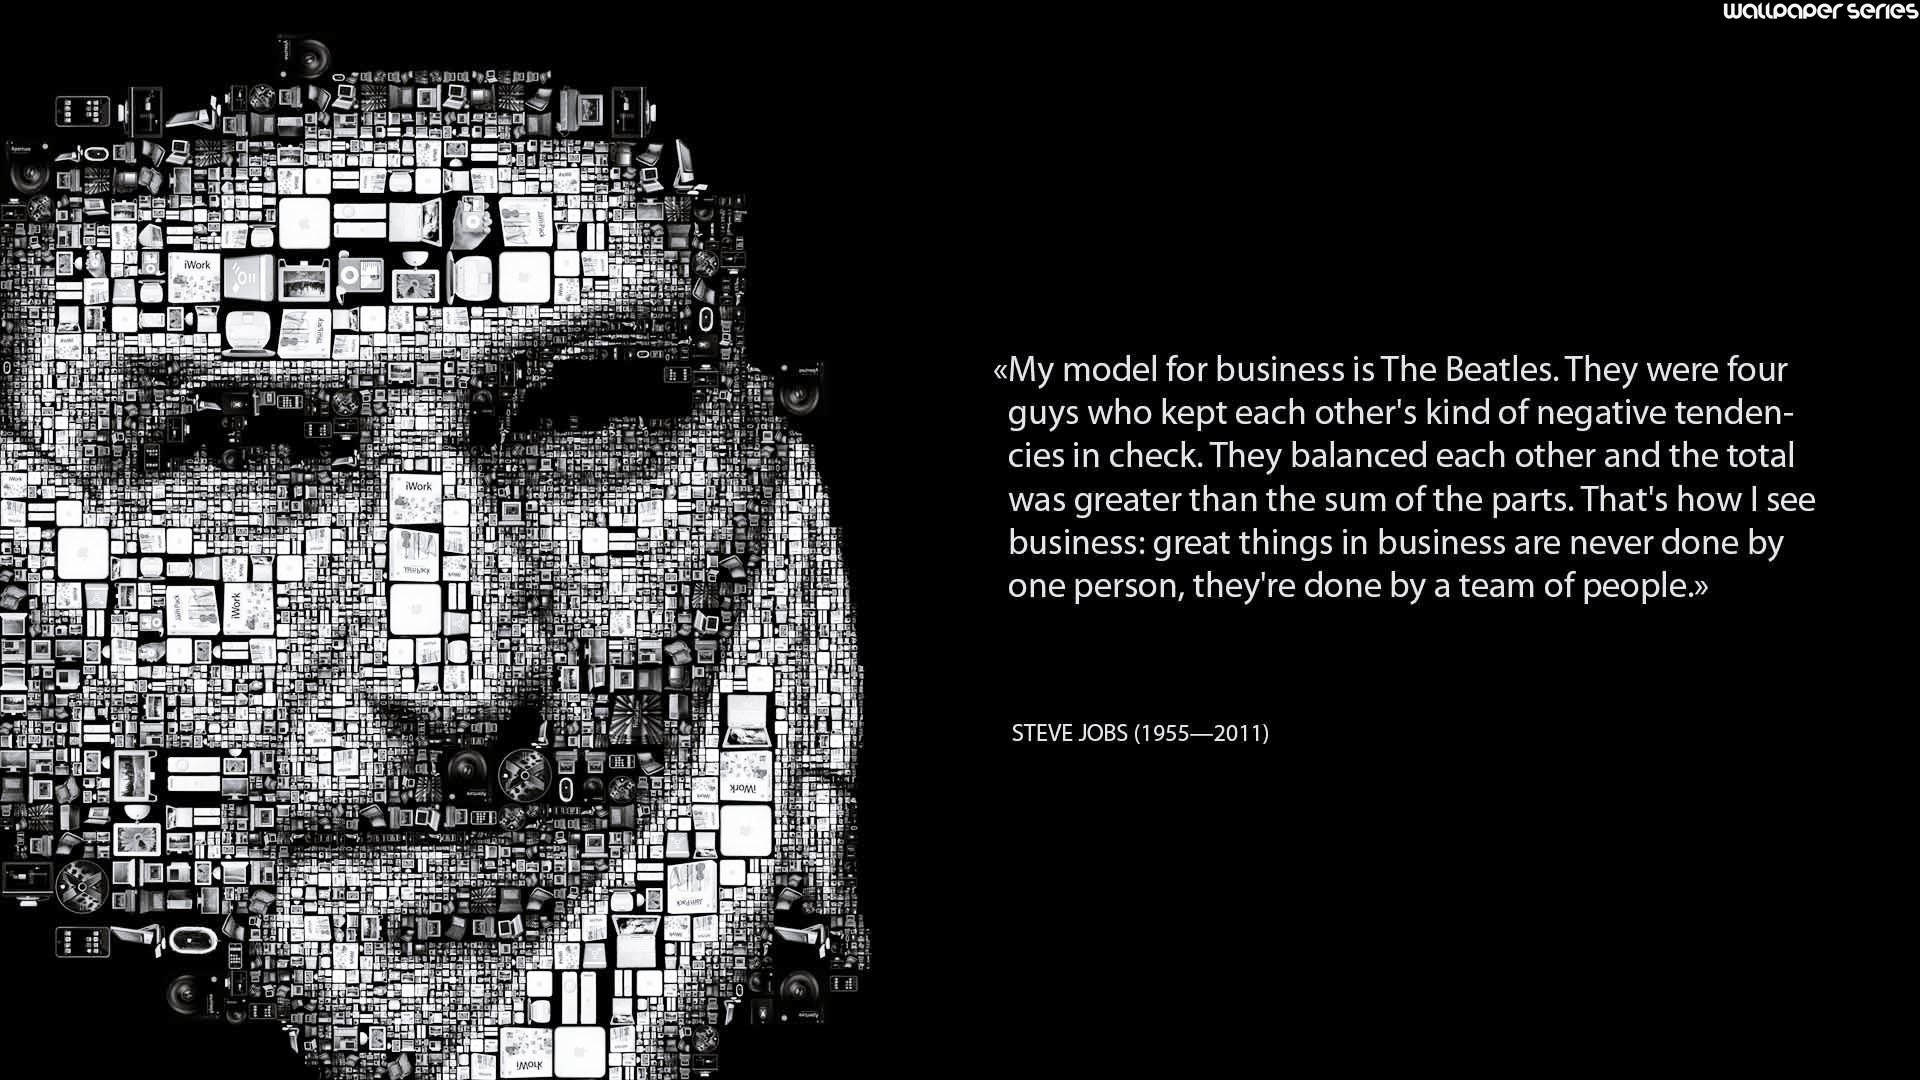 1920x1080 Steve Jobs Business Model Quotes Wallpaper 05857